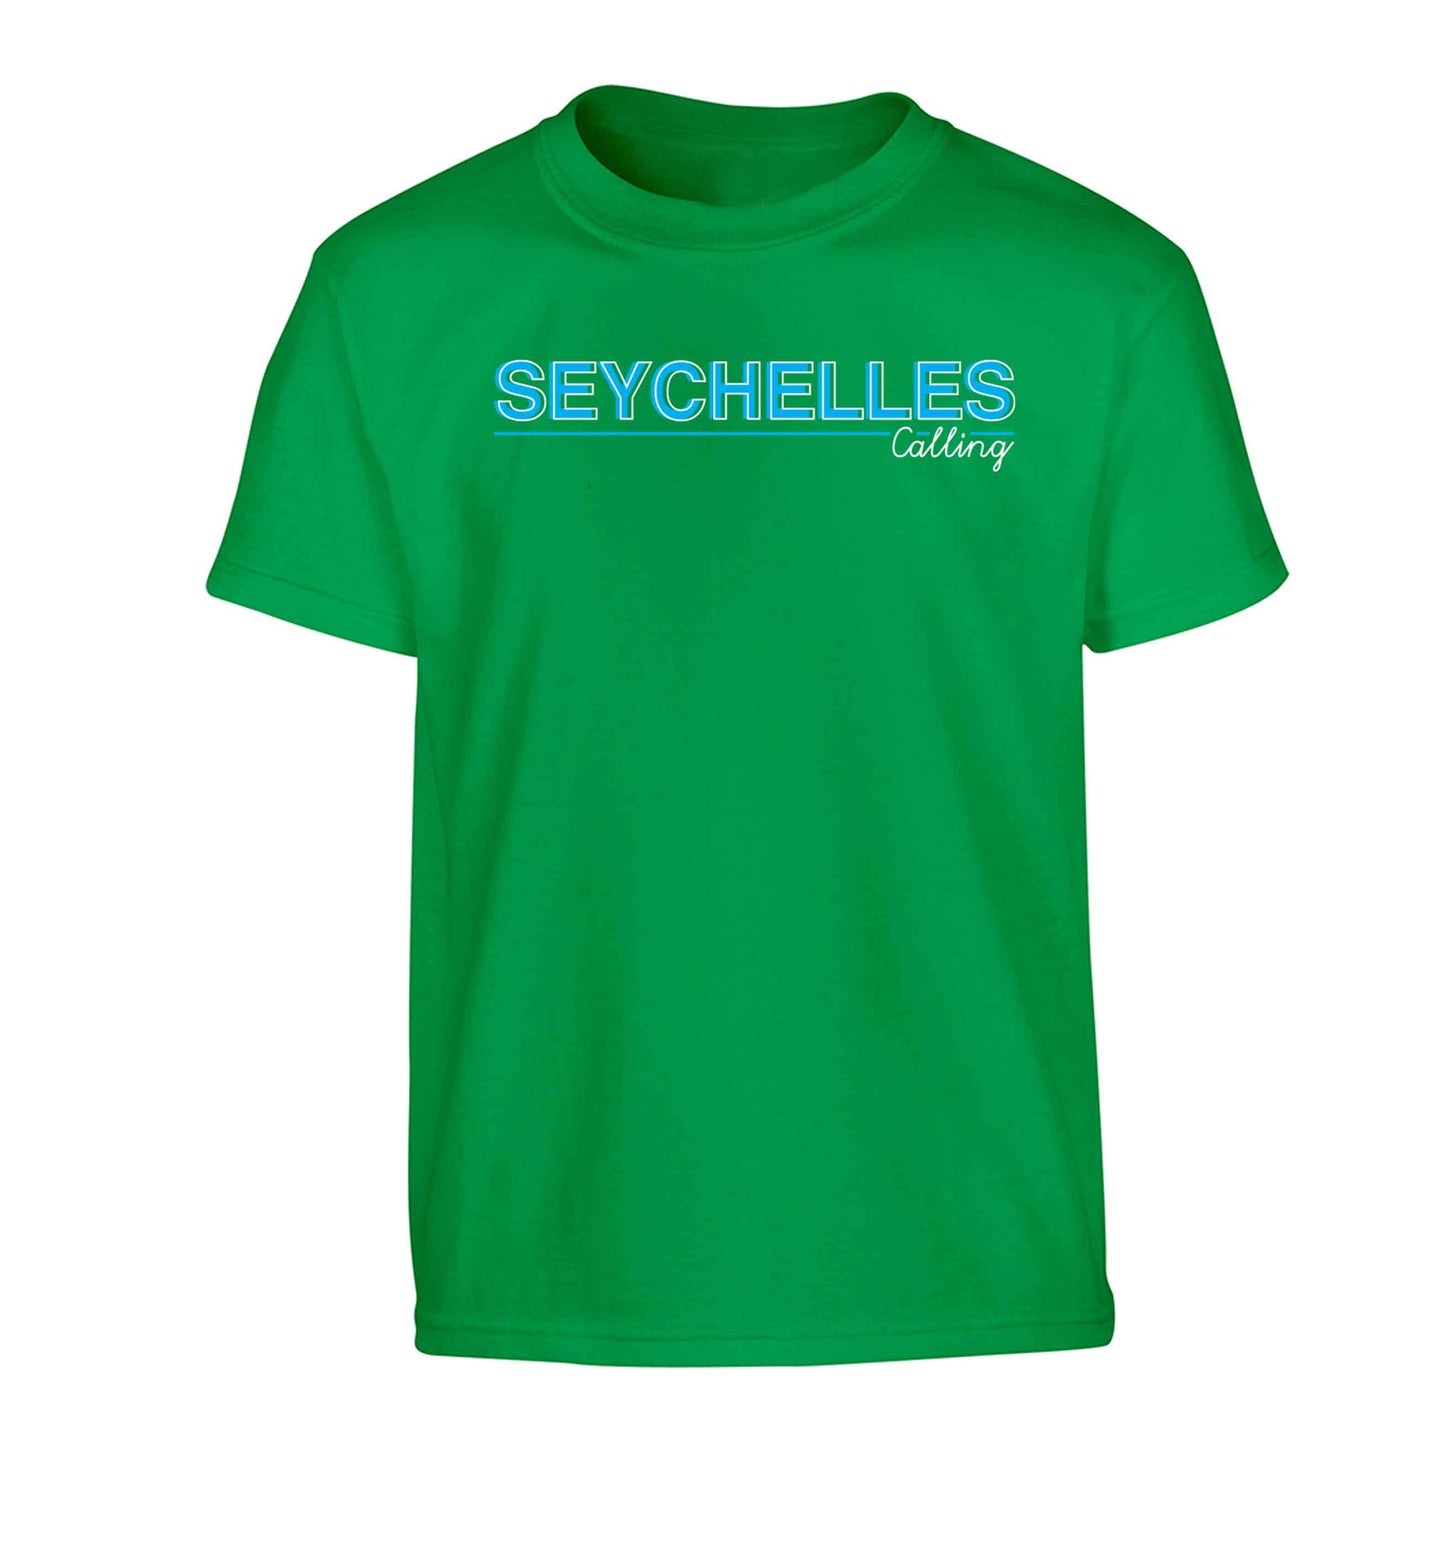 Seychelles calling Children's green Tshirt 12-13 Years